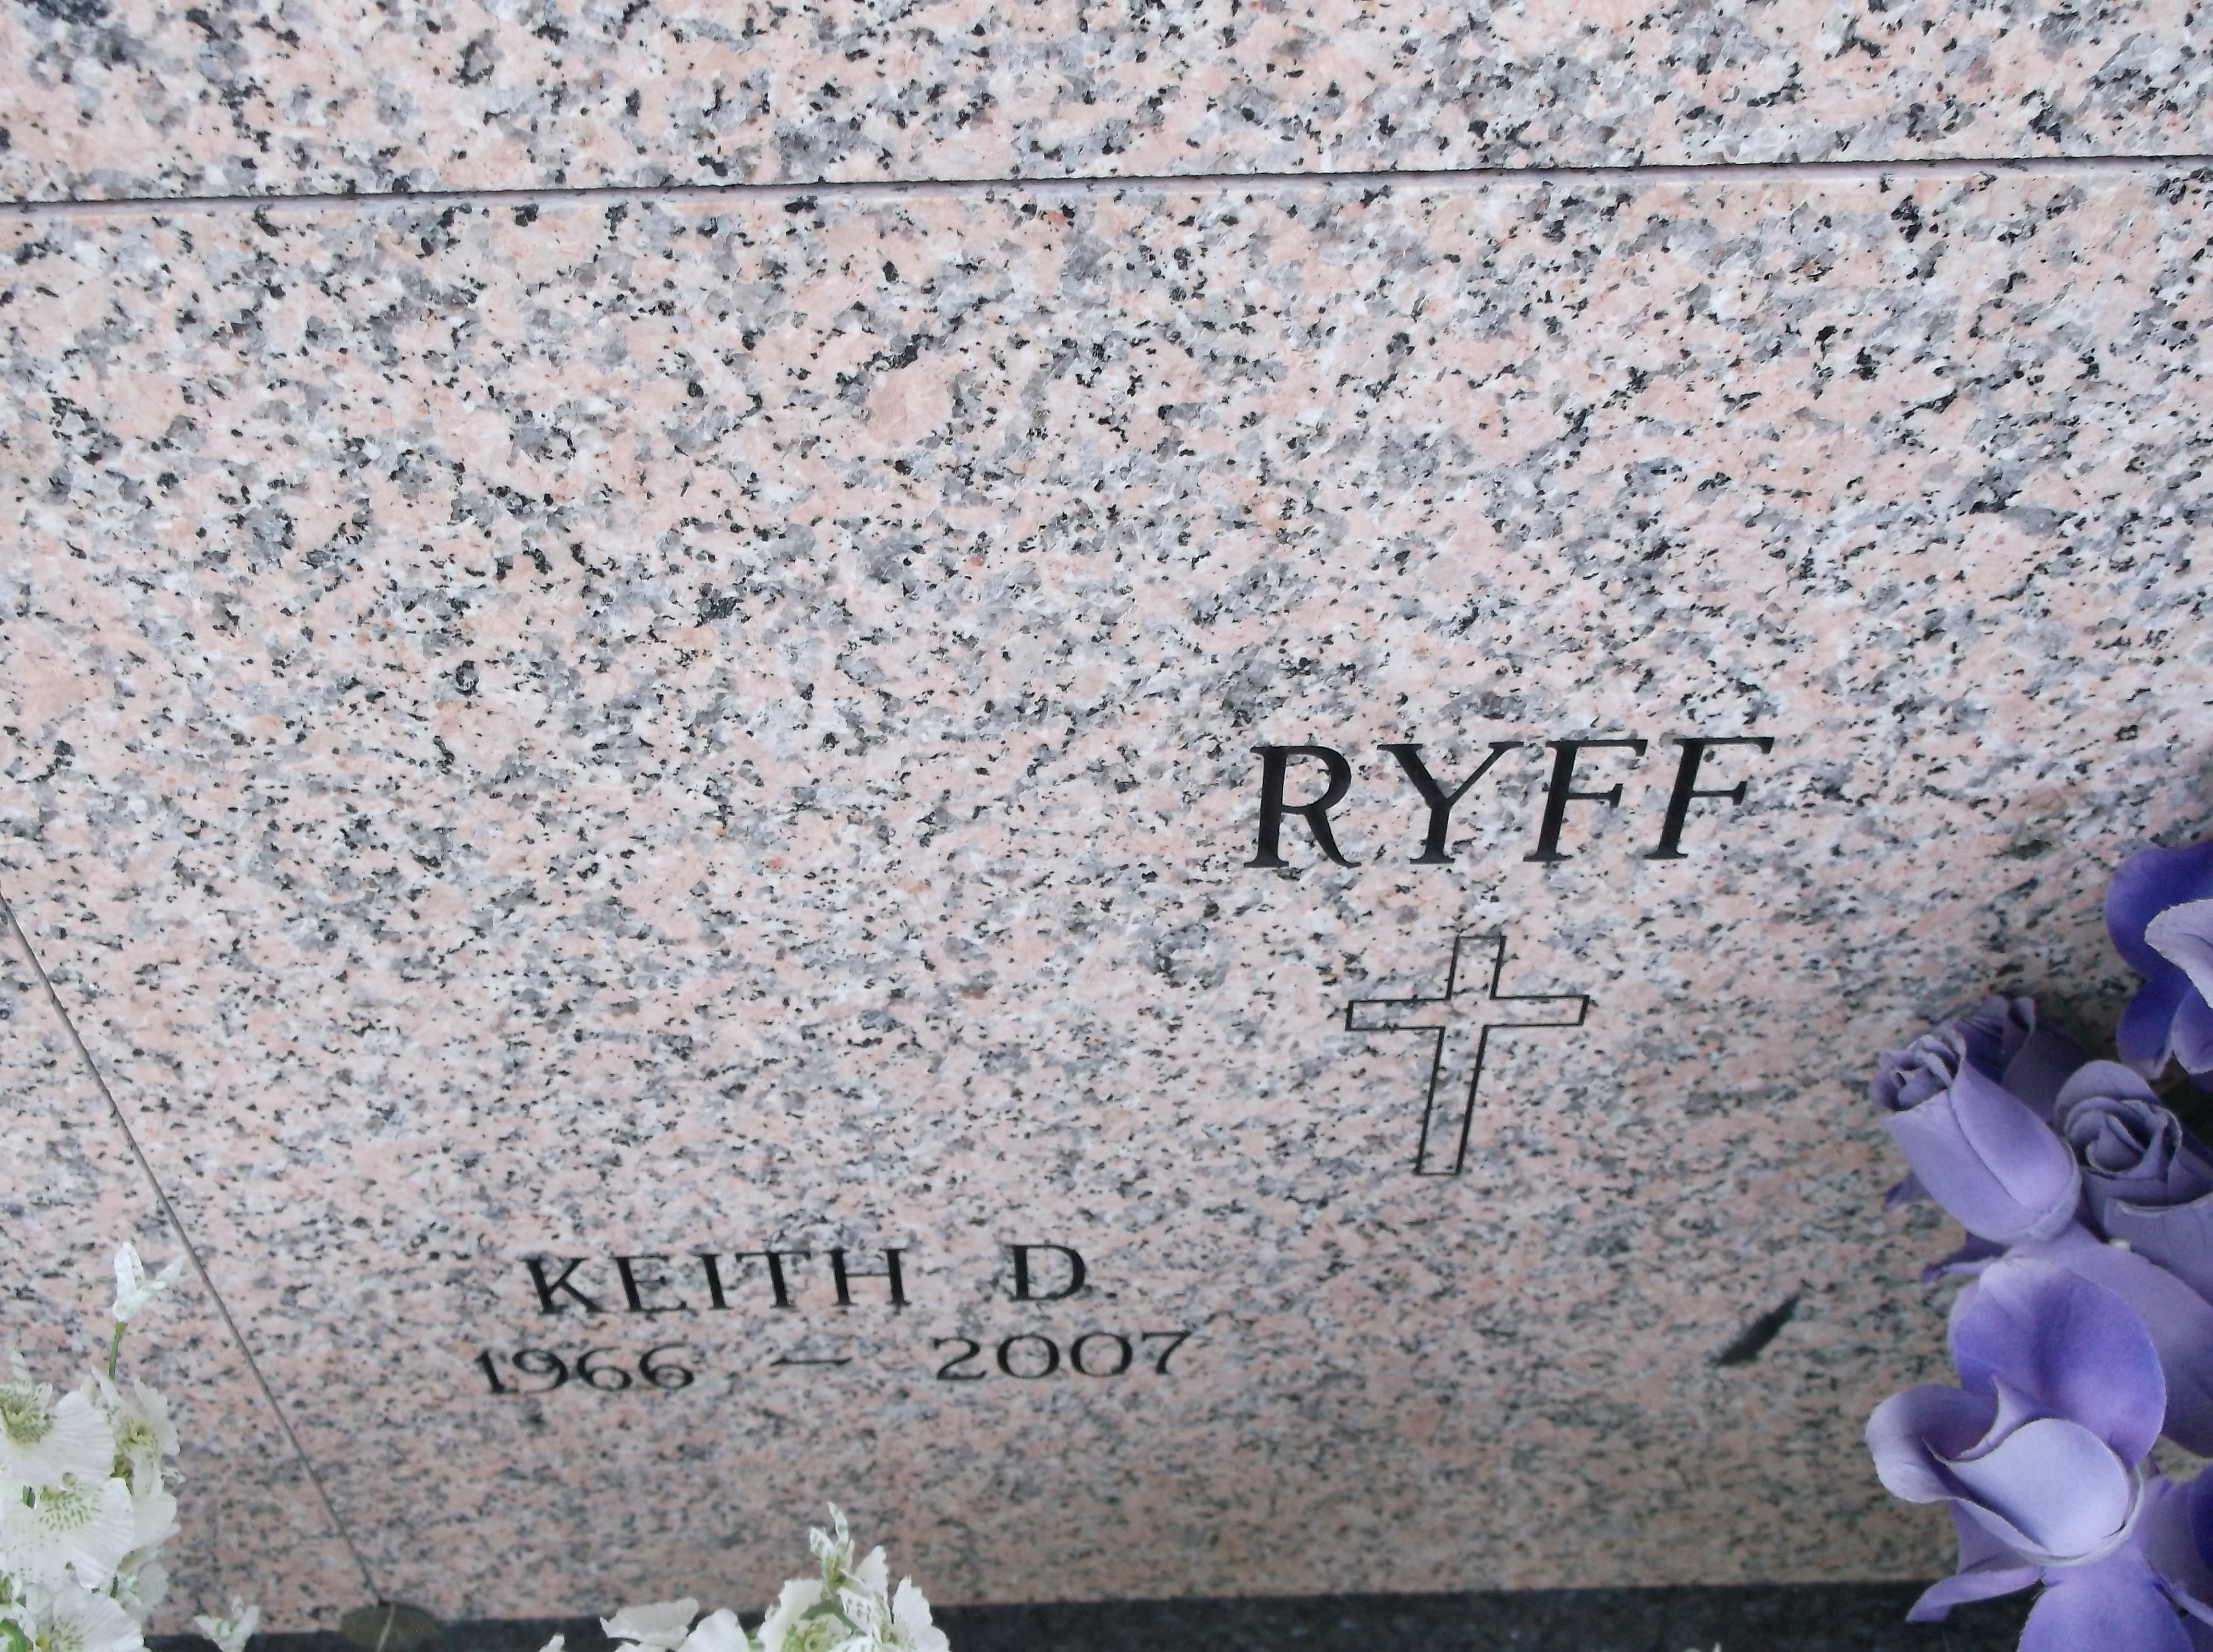 Keith D Ryff